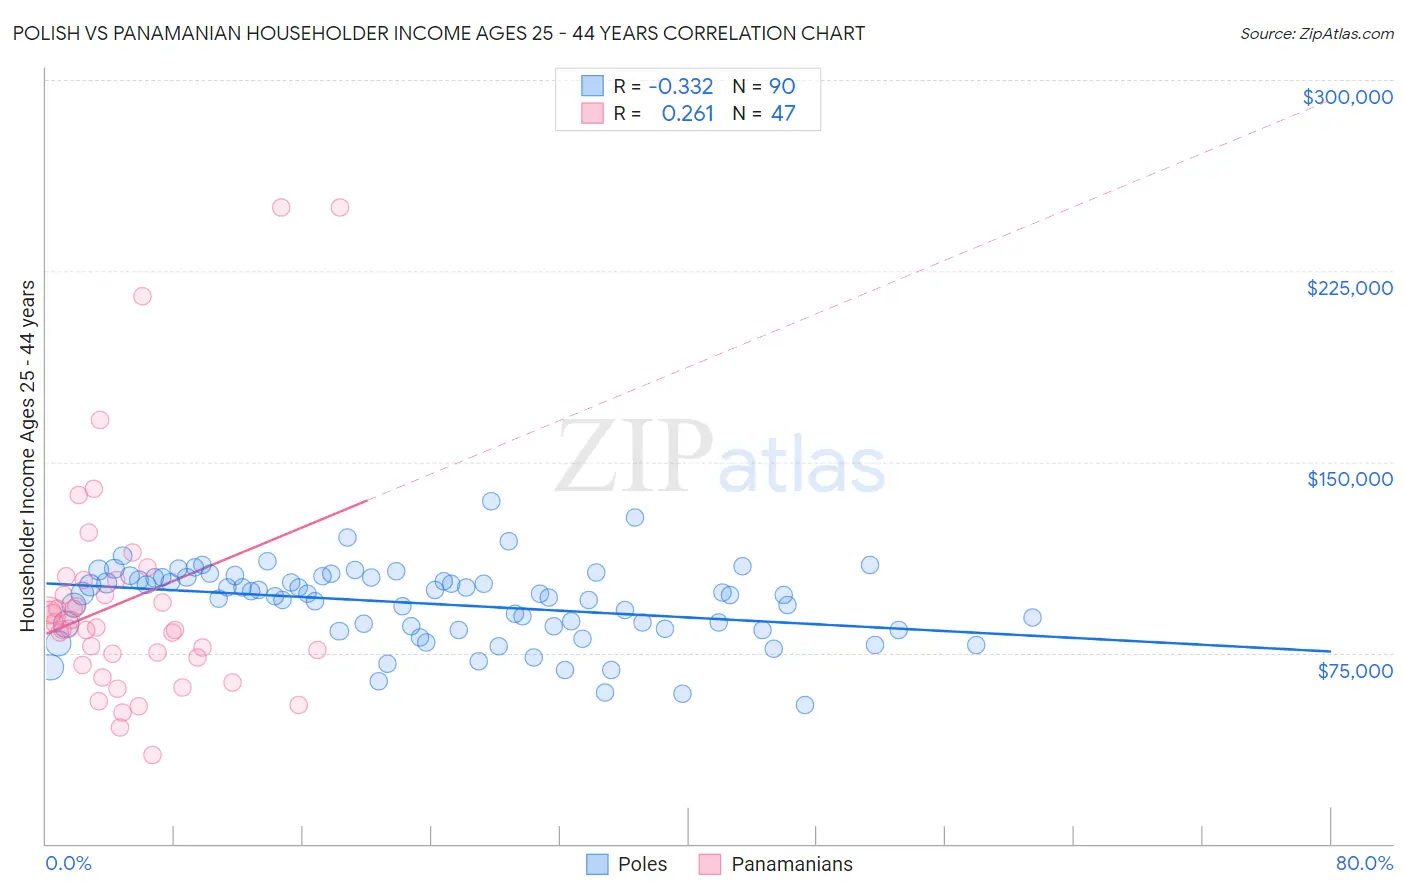 Polish vs Panamanian Householder Income Ages 25 - 44 years